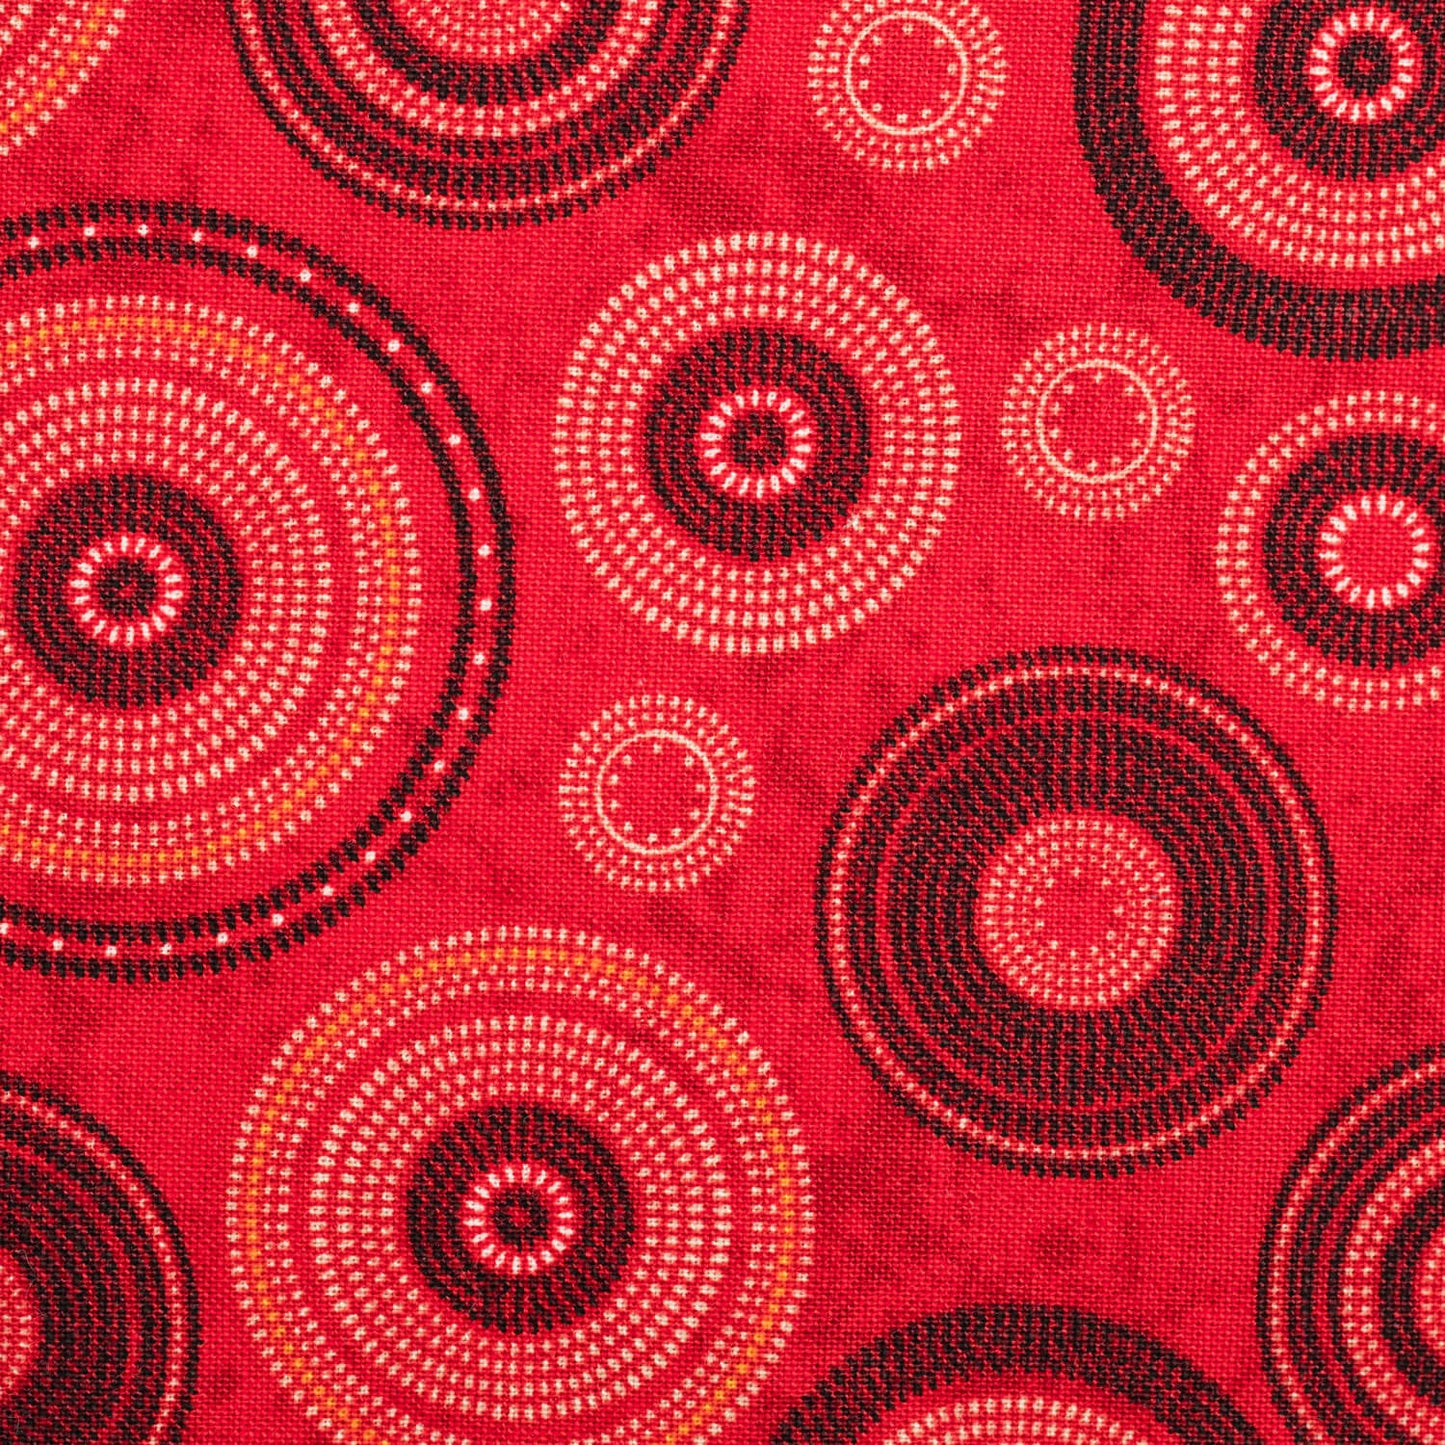 Red swirl pattern cloth